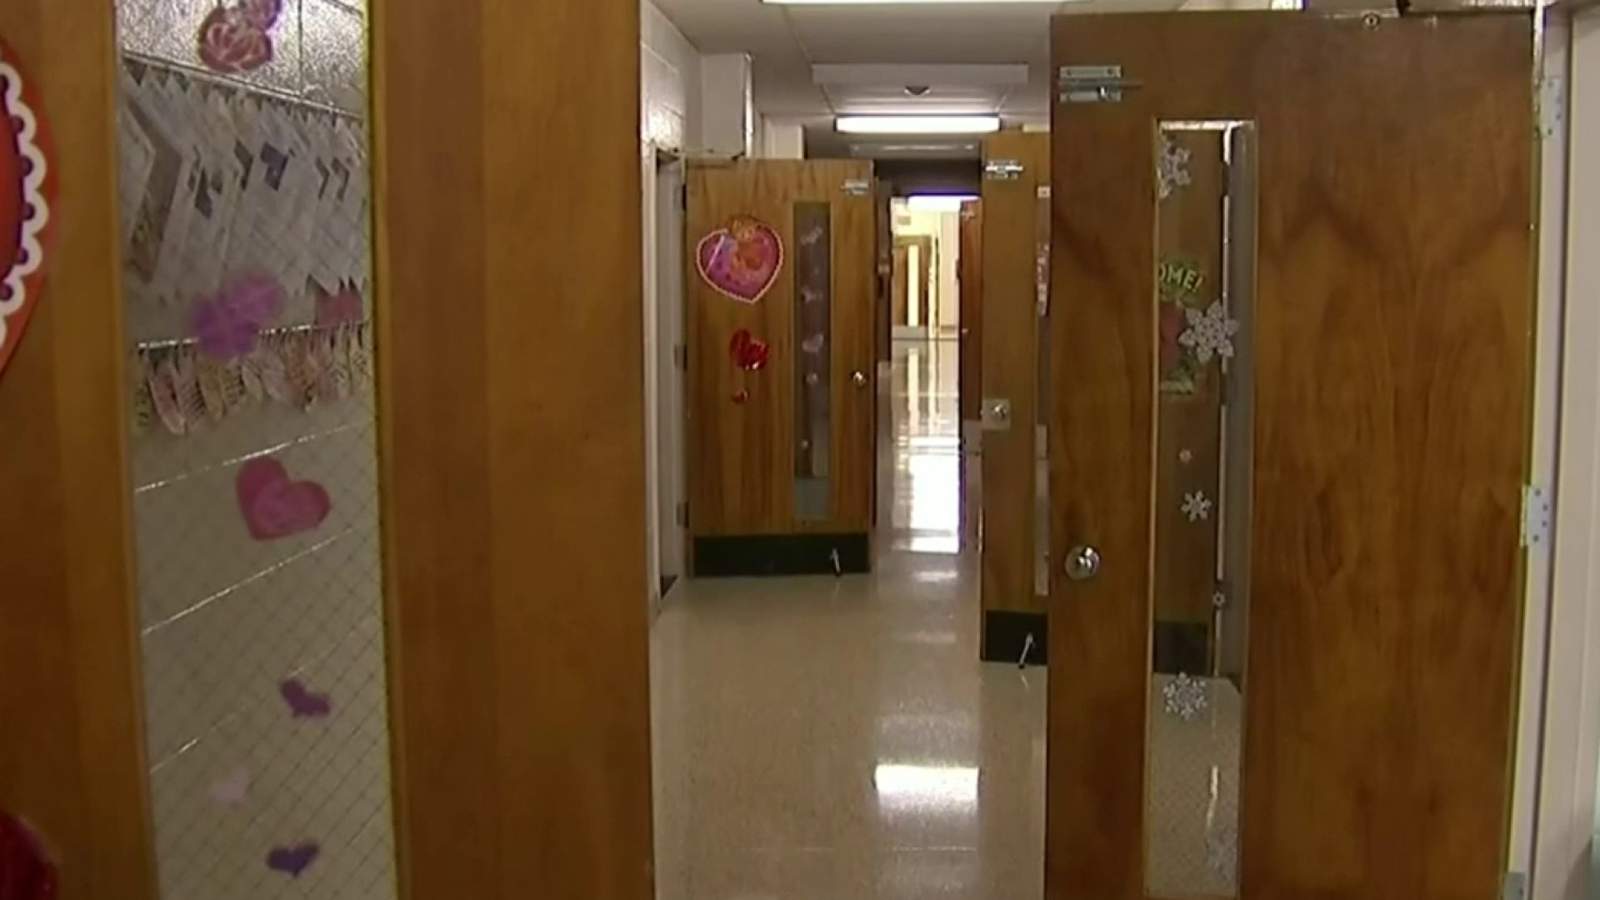 26 Michigan schools report new coronavirus outbreaks